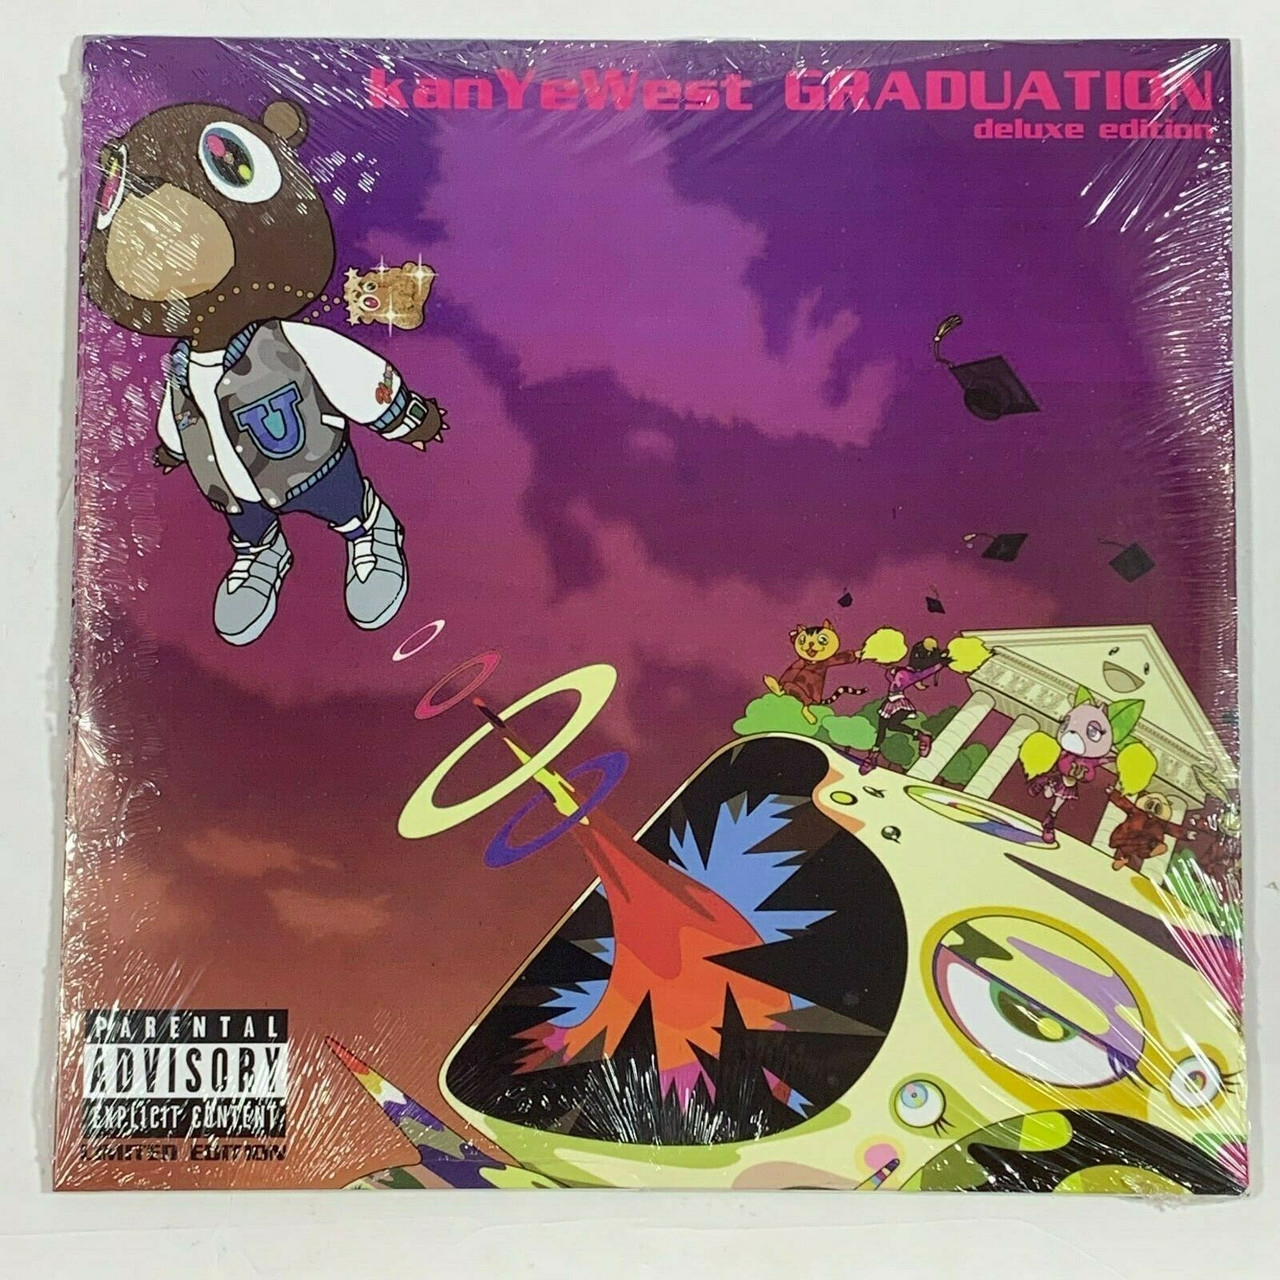 Graduation (album) - Wikipedia